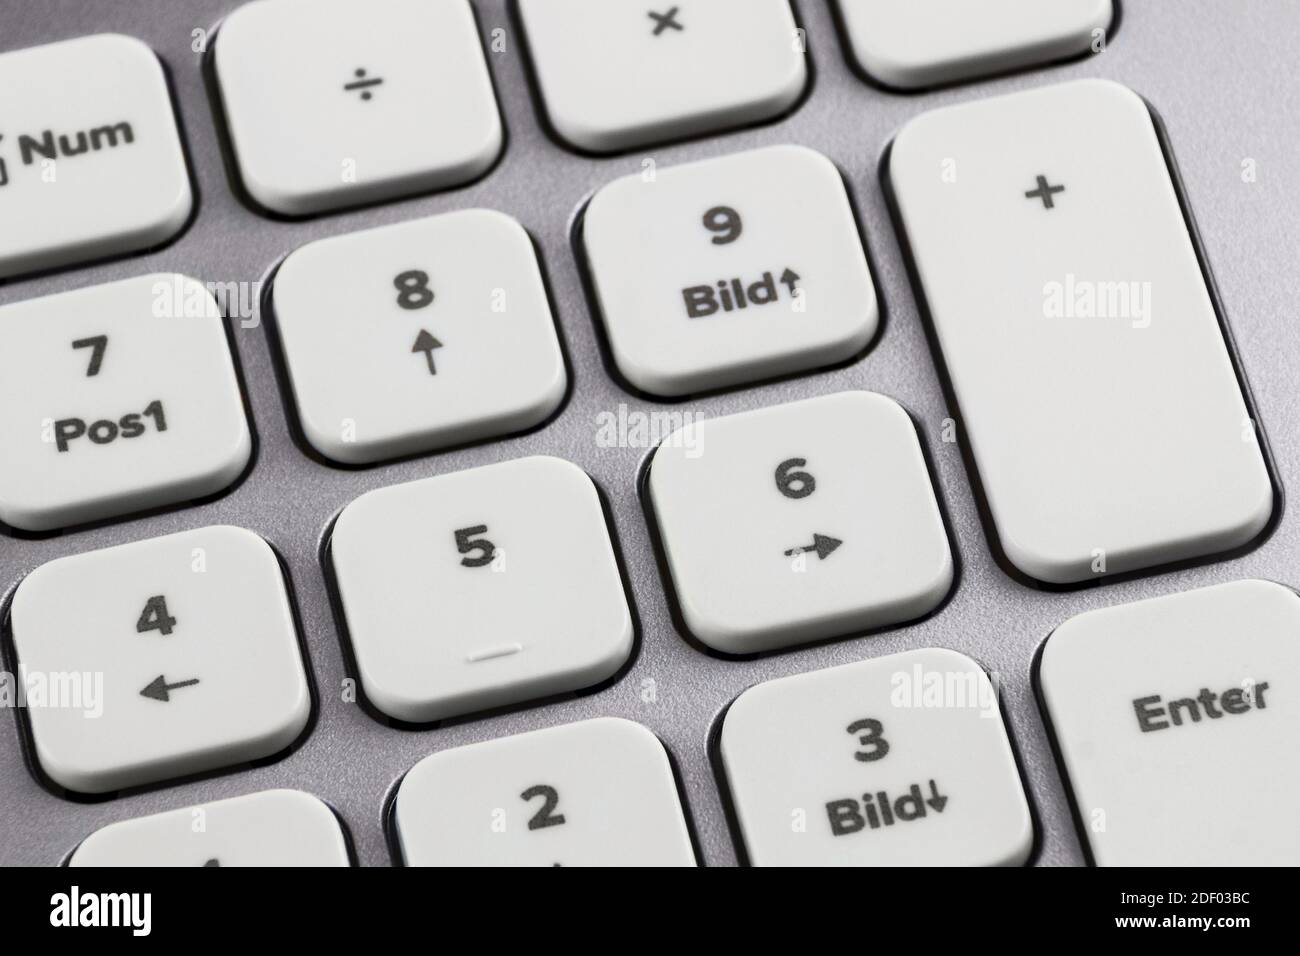 German PC keyboard close up Stock Photo